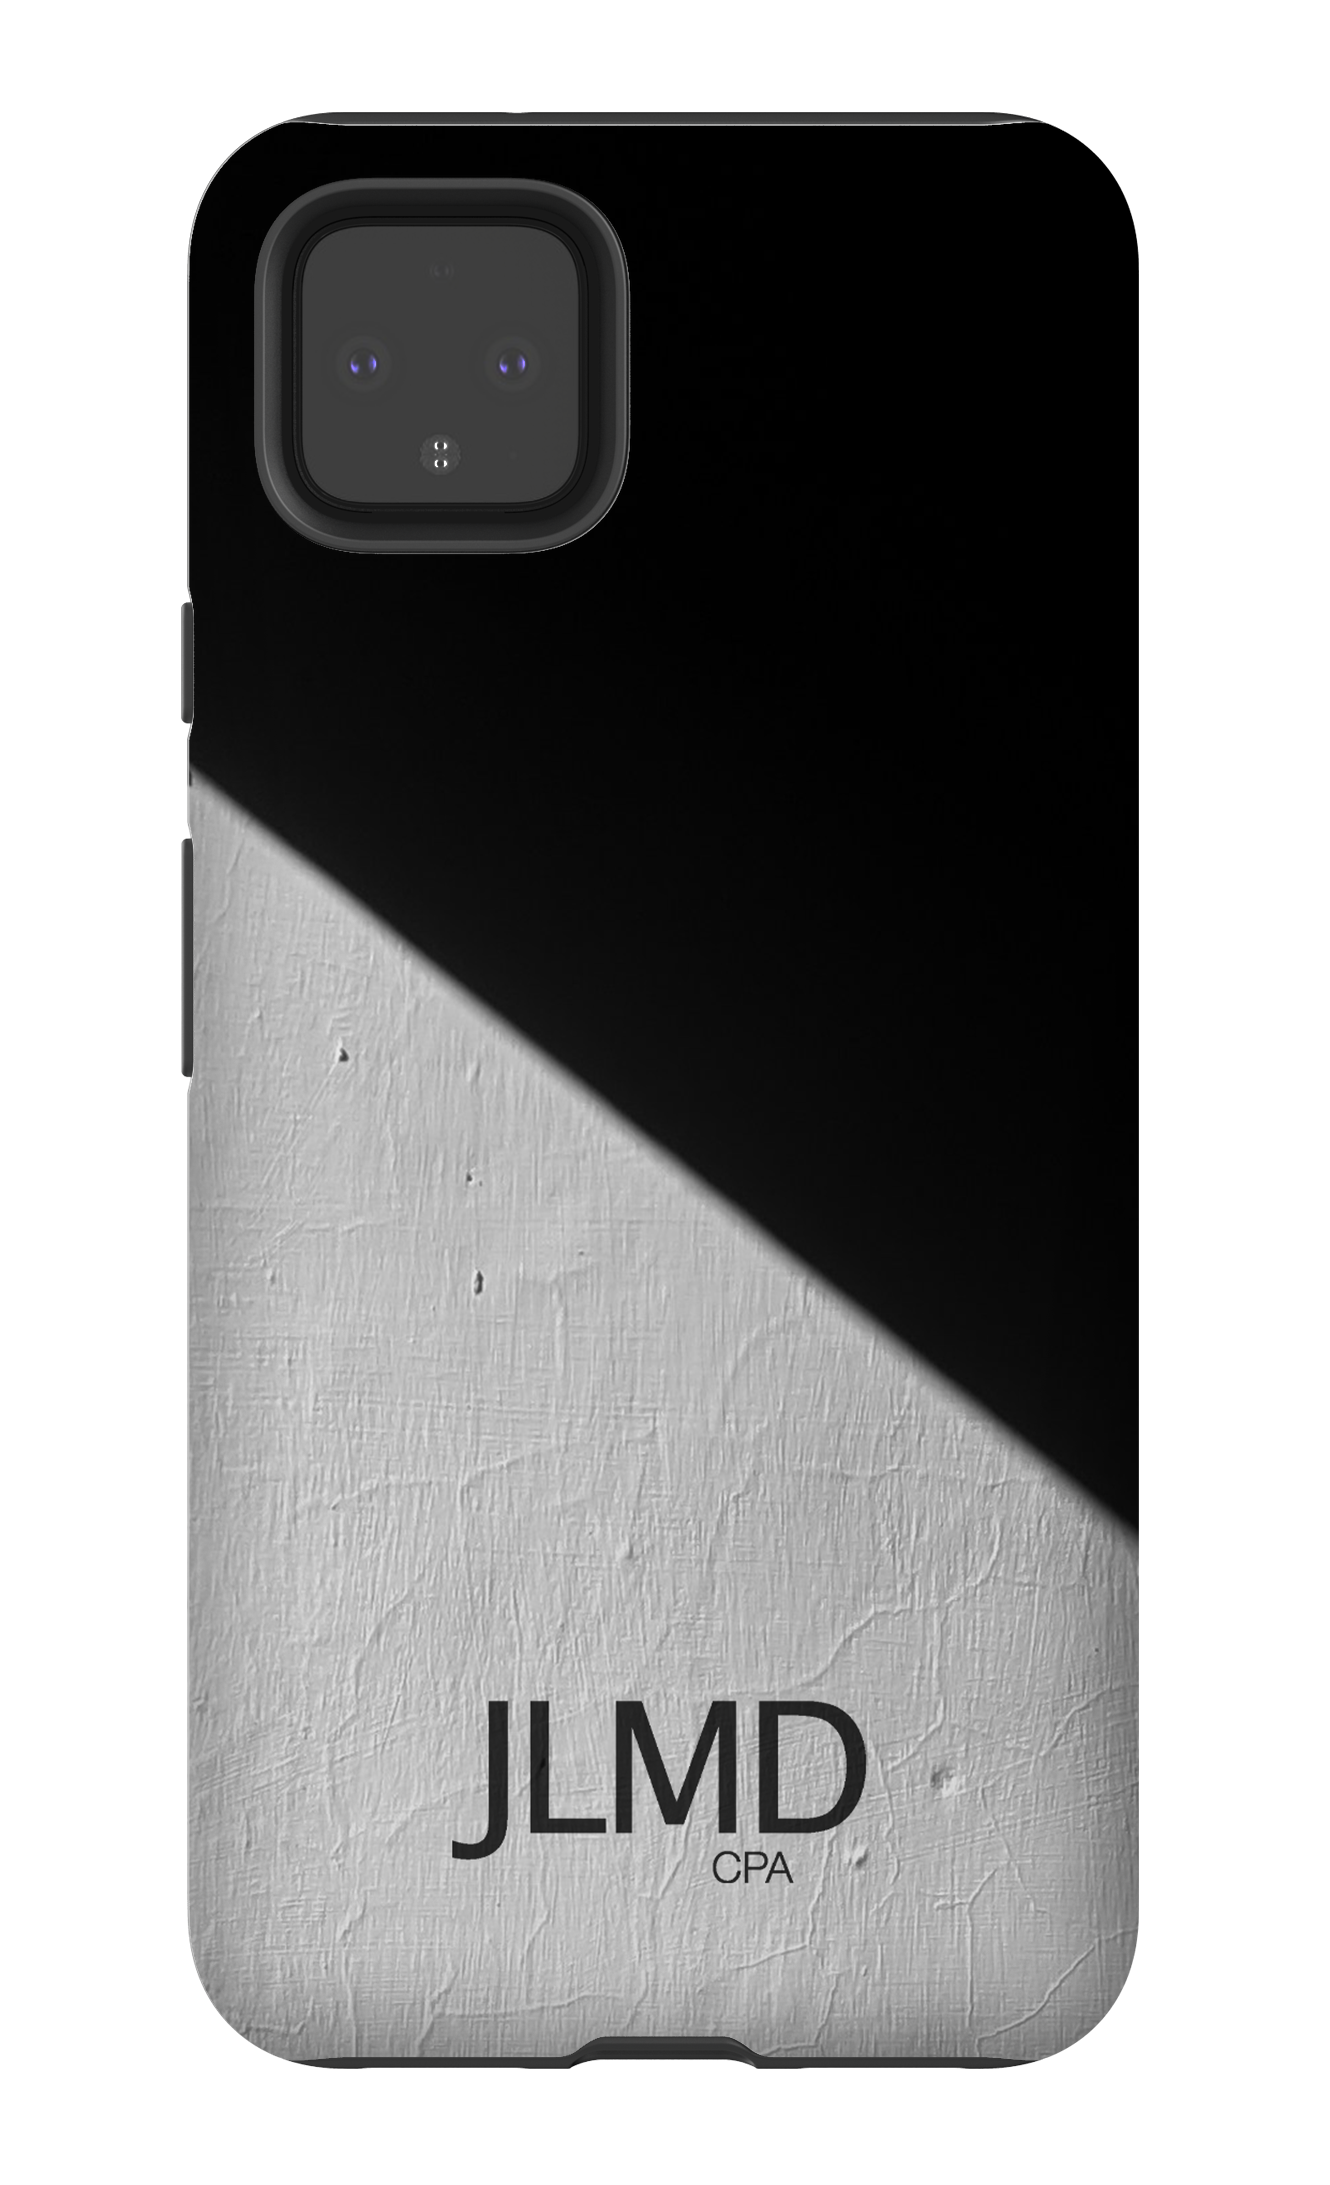 JLMD - Google Pixel 4 XL